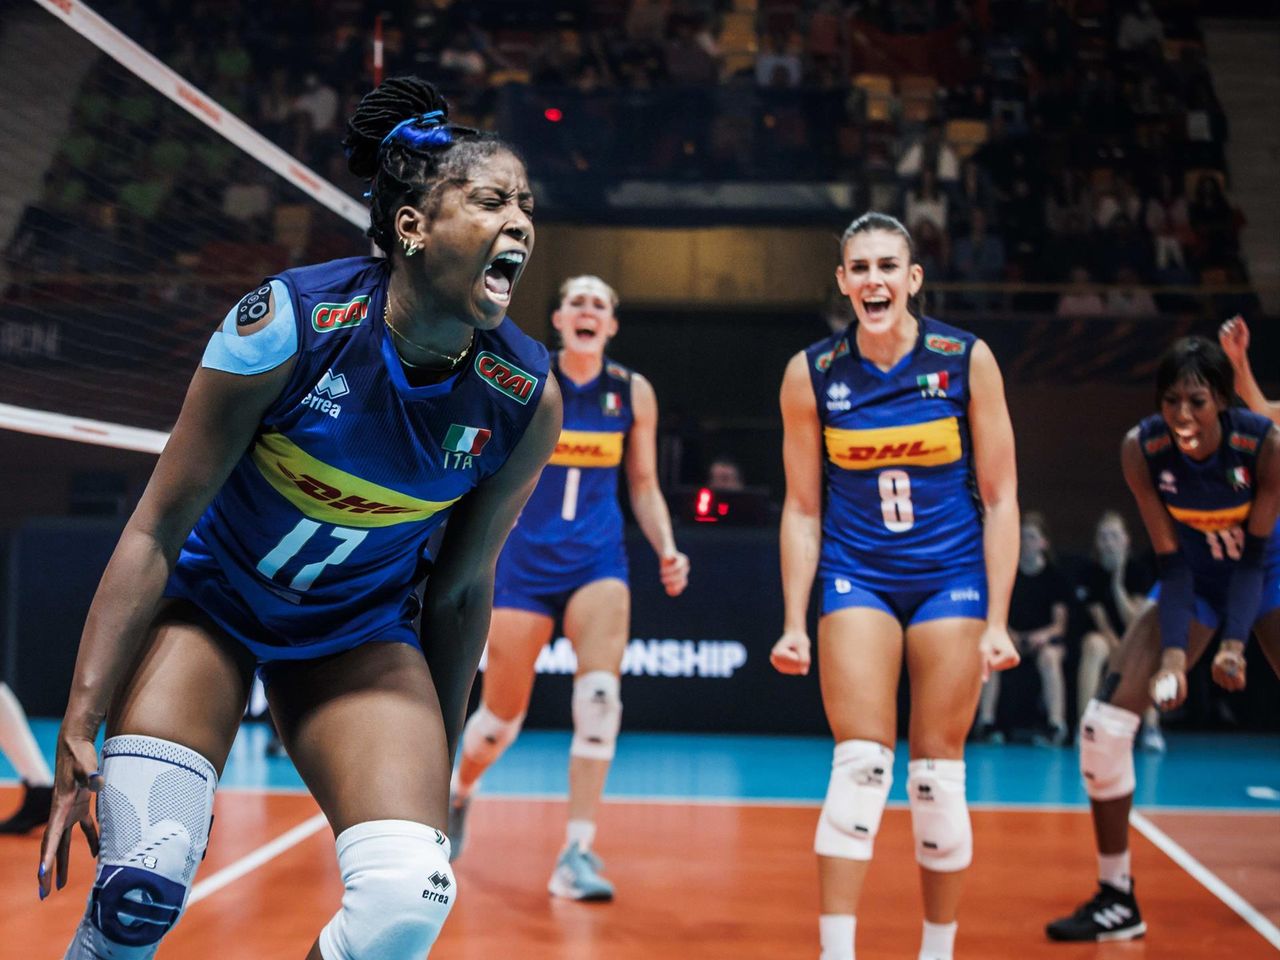 Italia - Brasile, alle 20 la semifinale del mondiale di volley femminile: dove vederla in streaming